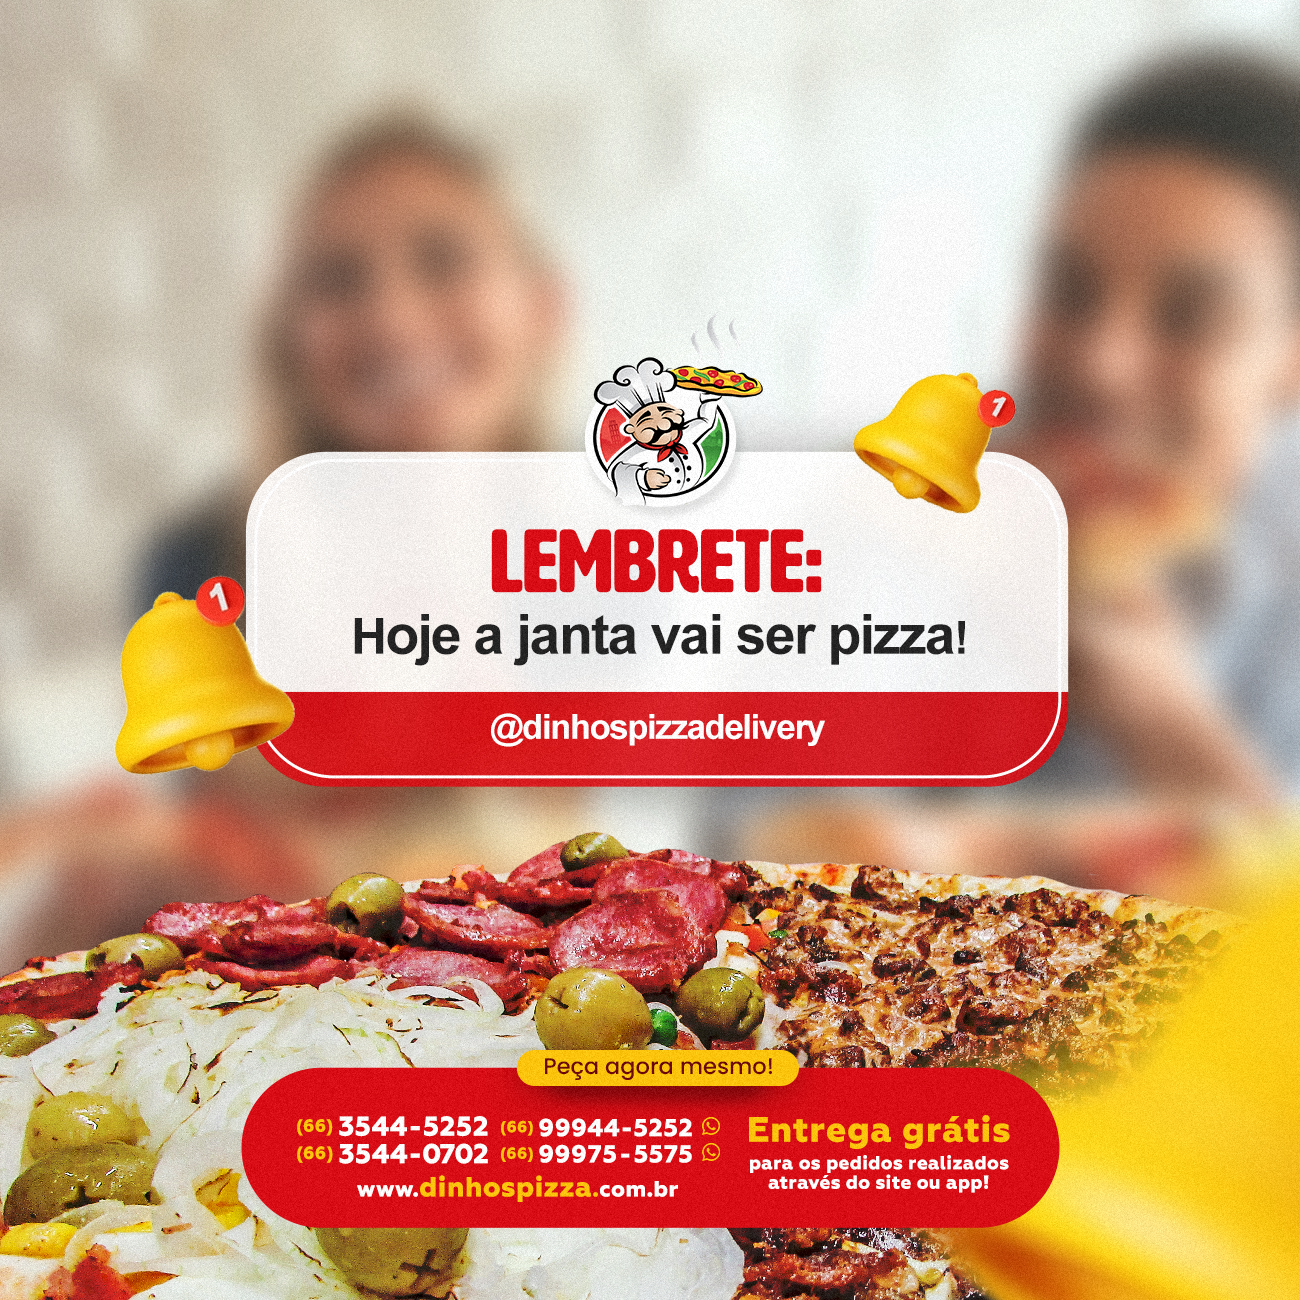 Dinhos Pizza - Abr23 - Post 08